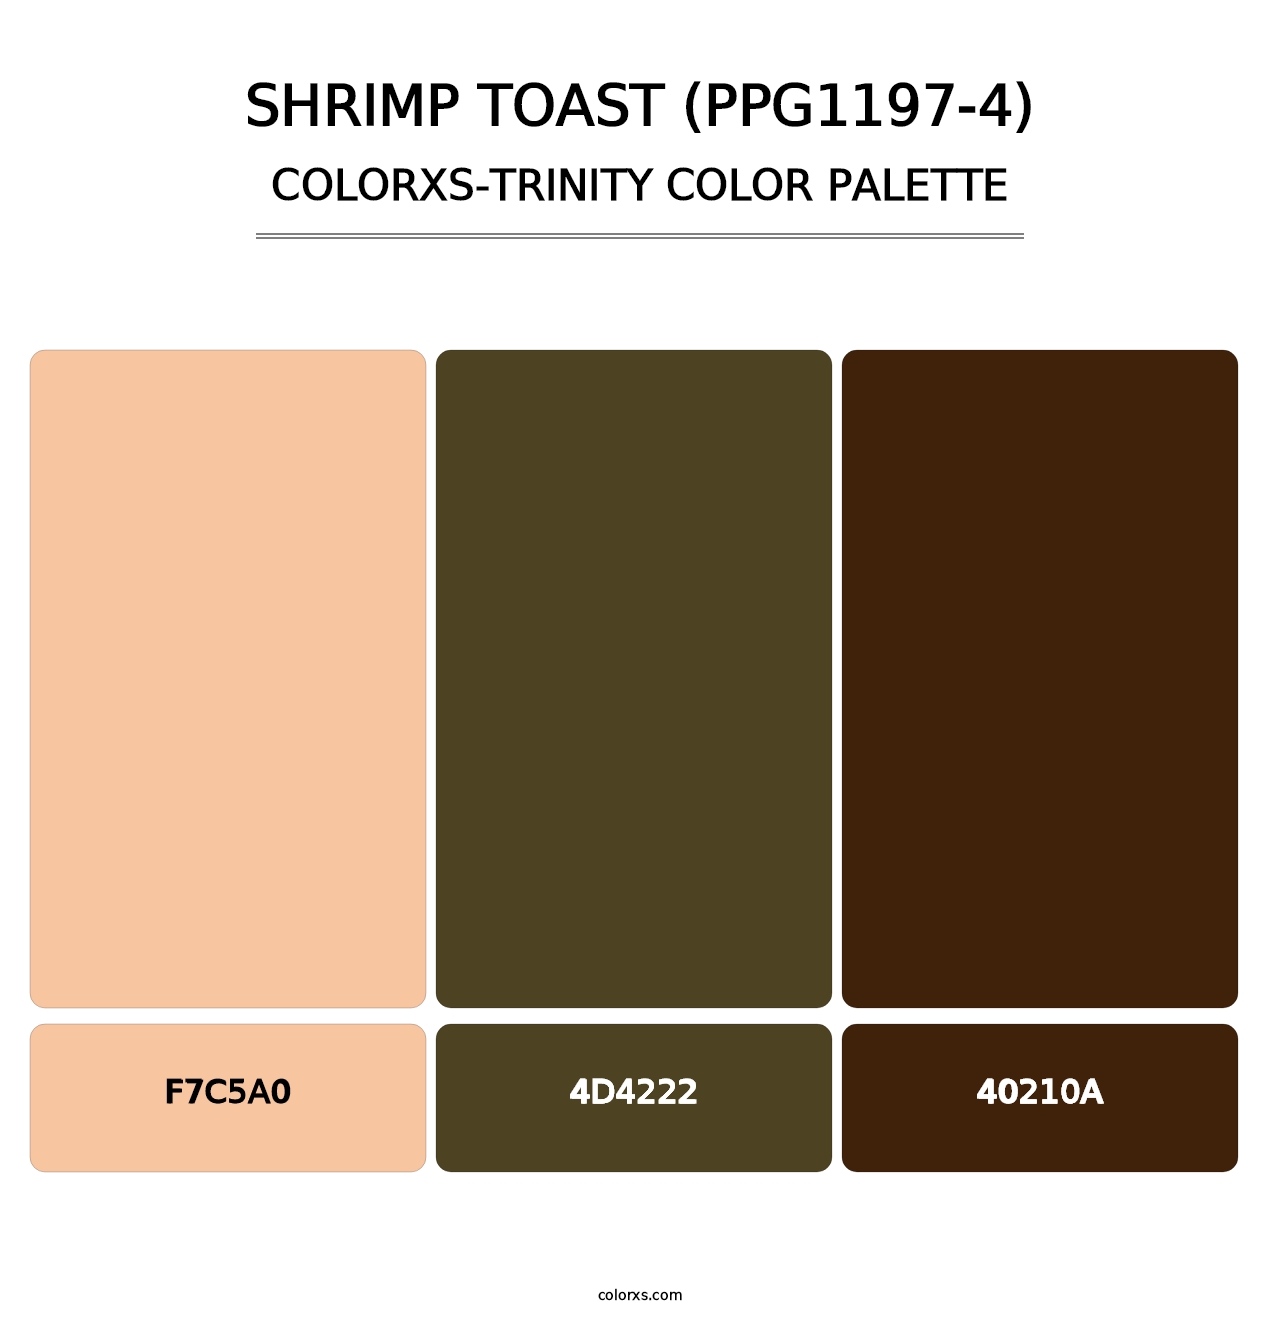 Shrimp Toast (PPG1197-4) - Colorxs Trinity Palette